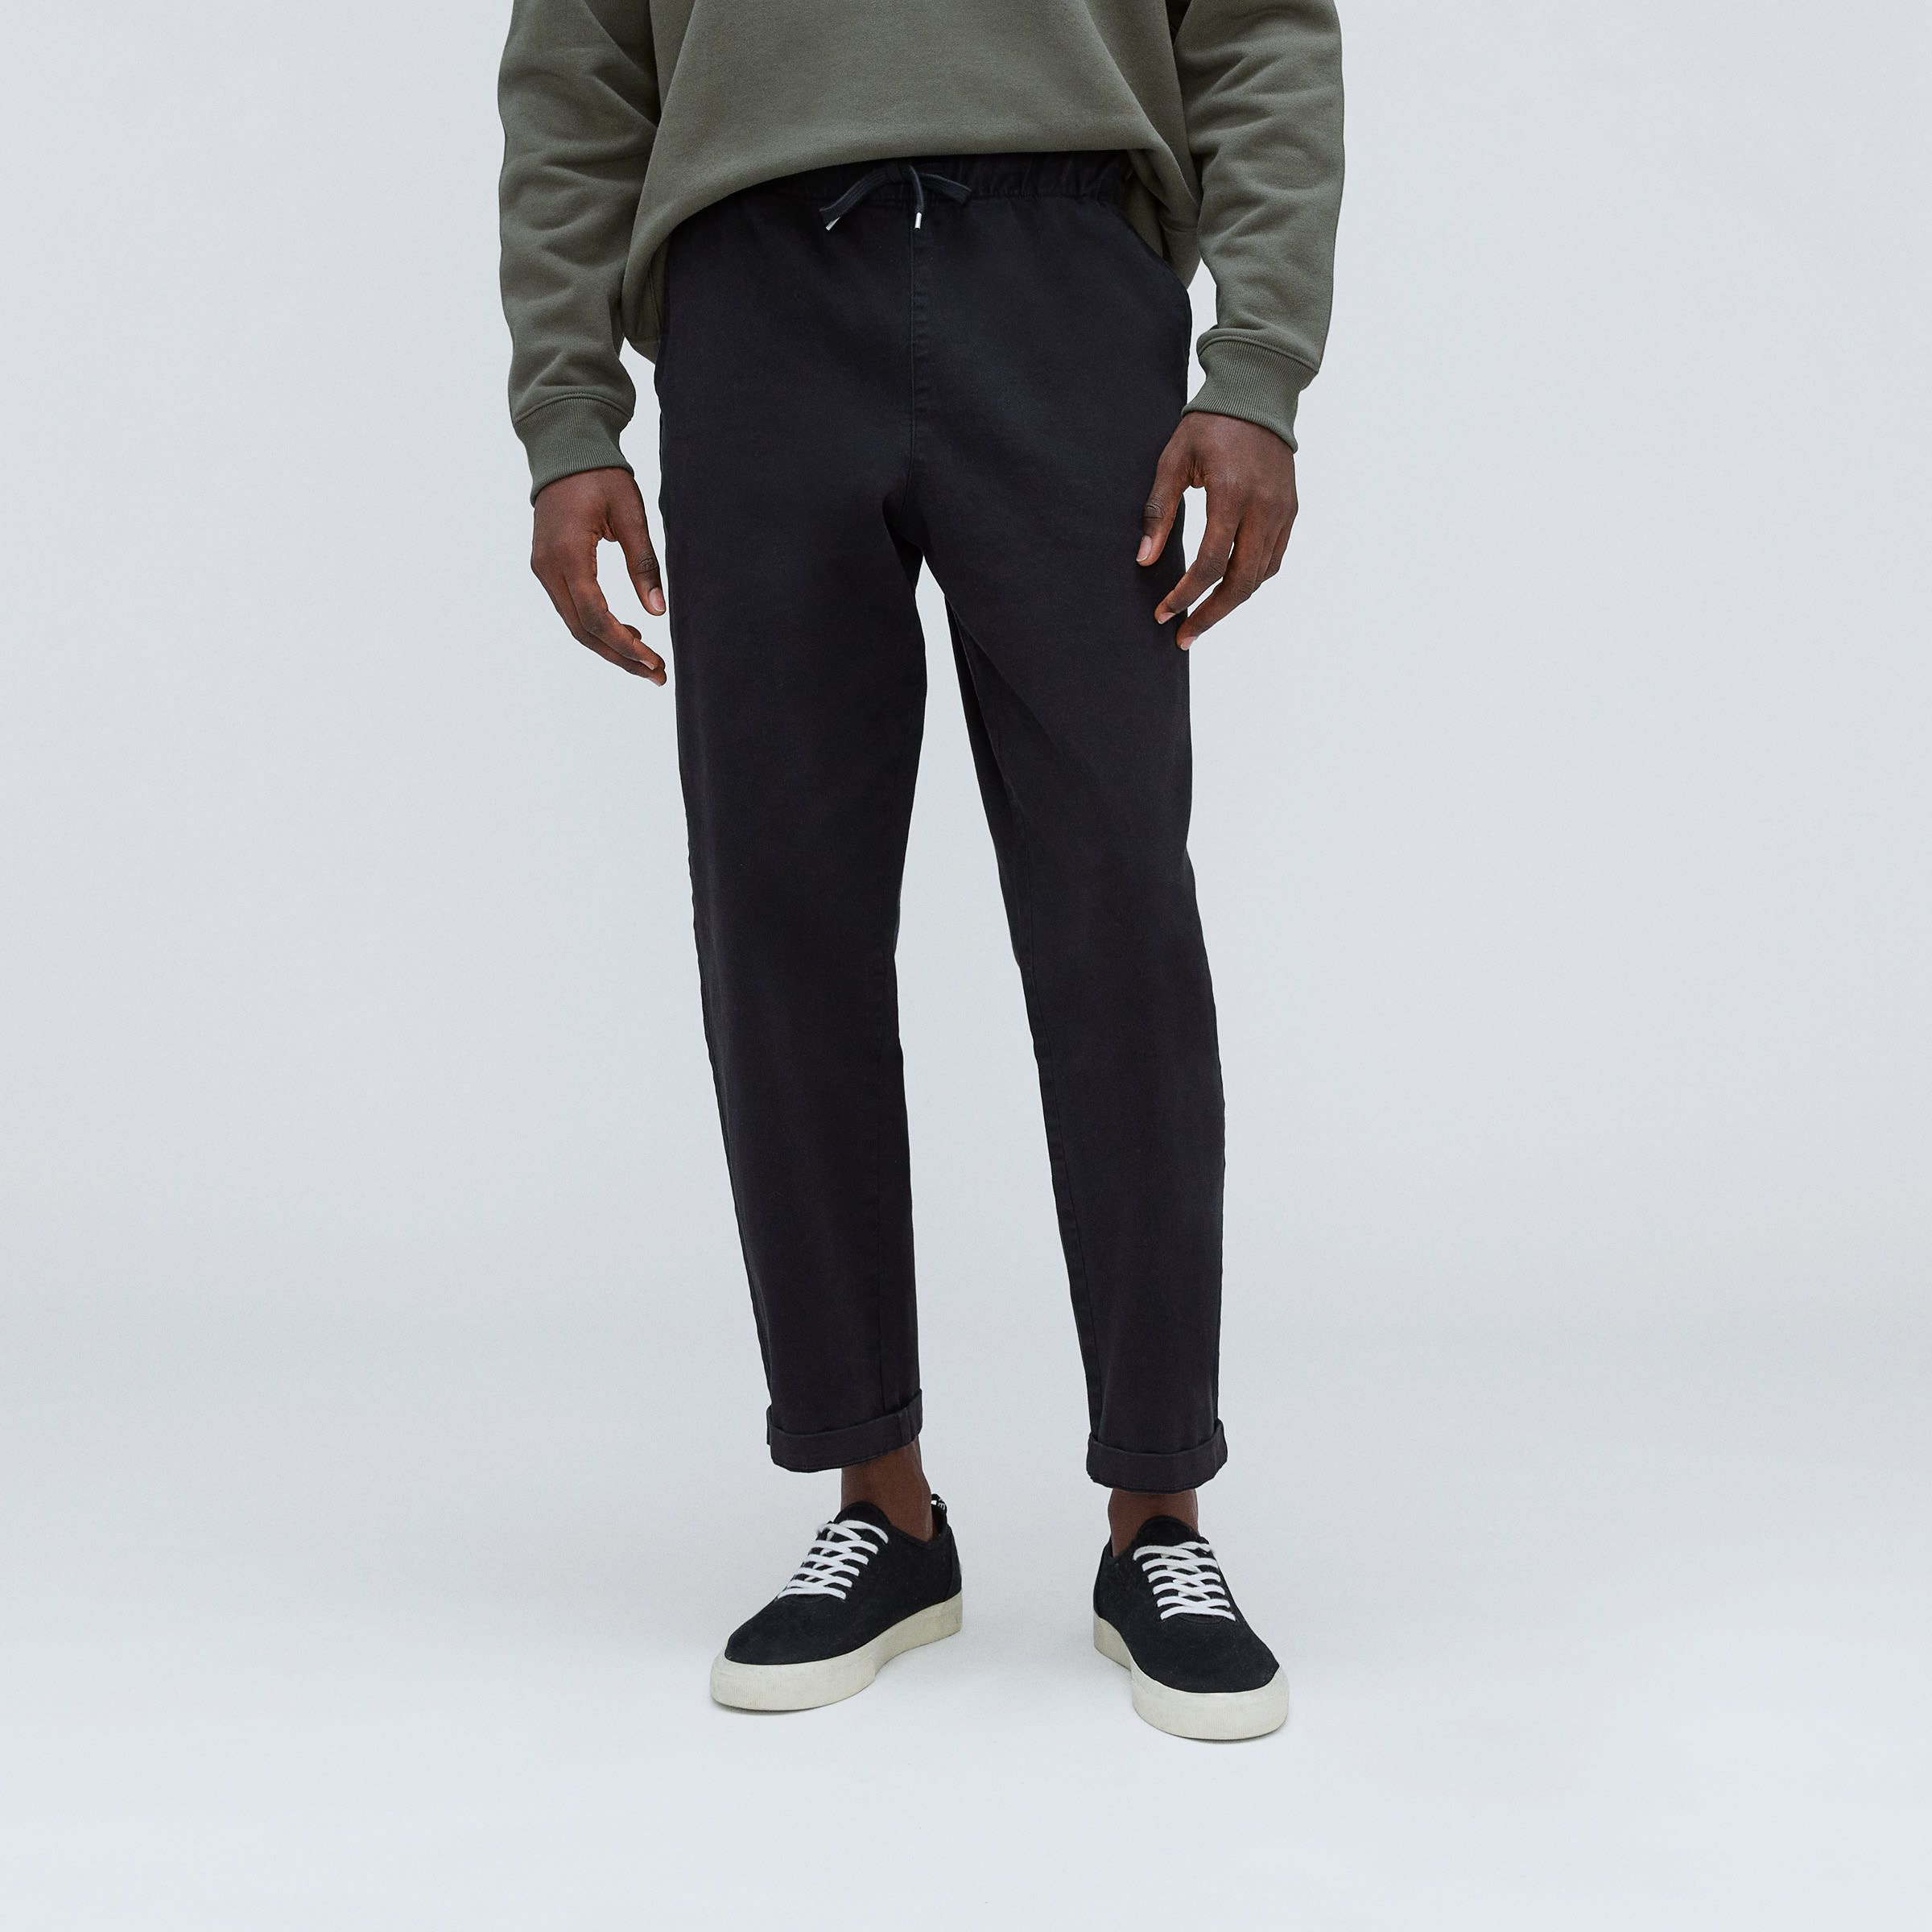 Light Trendy Pants - Alora | Streetwear pants for men